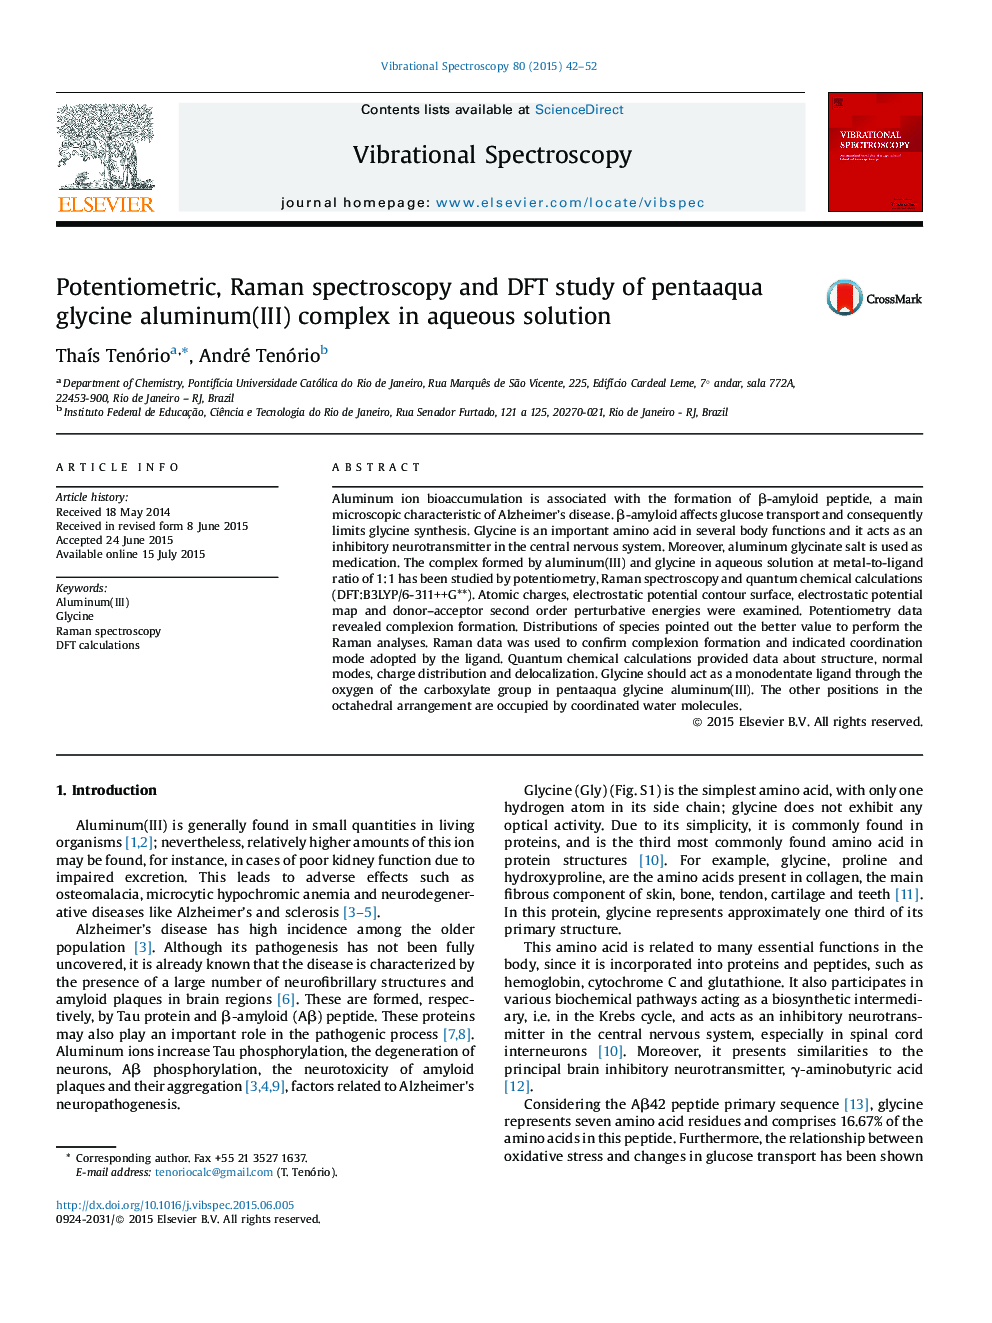 Potentiometric, Raman spectroscopy and DFT study of pentaaqua glycine aluminum(III) complex in aqueous solution